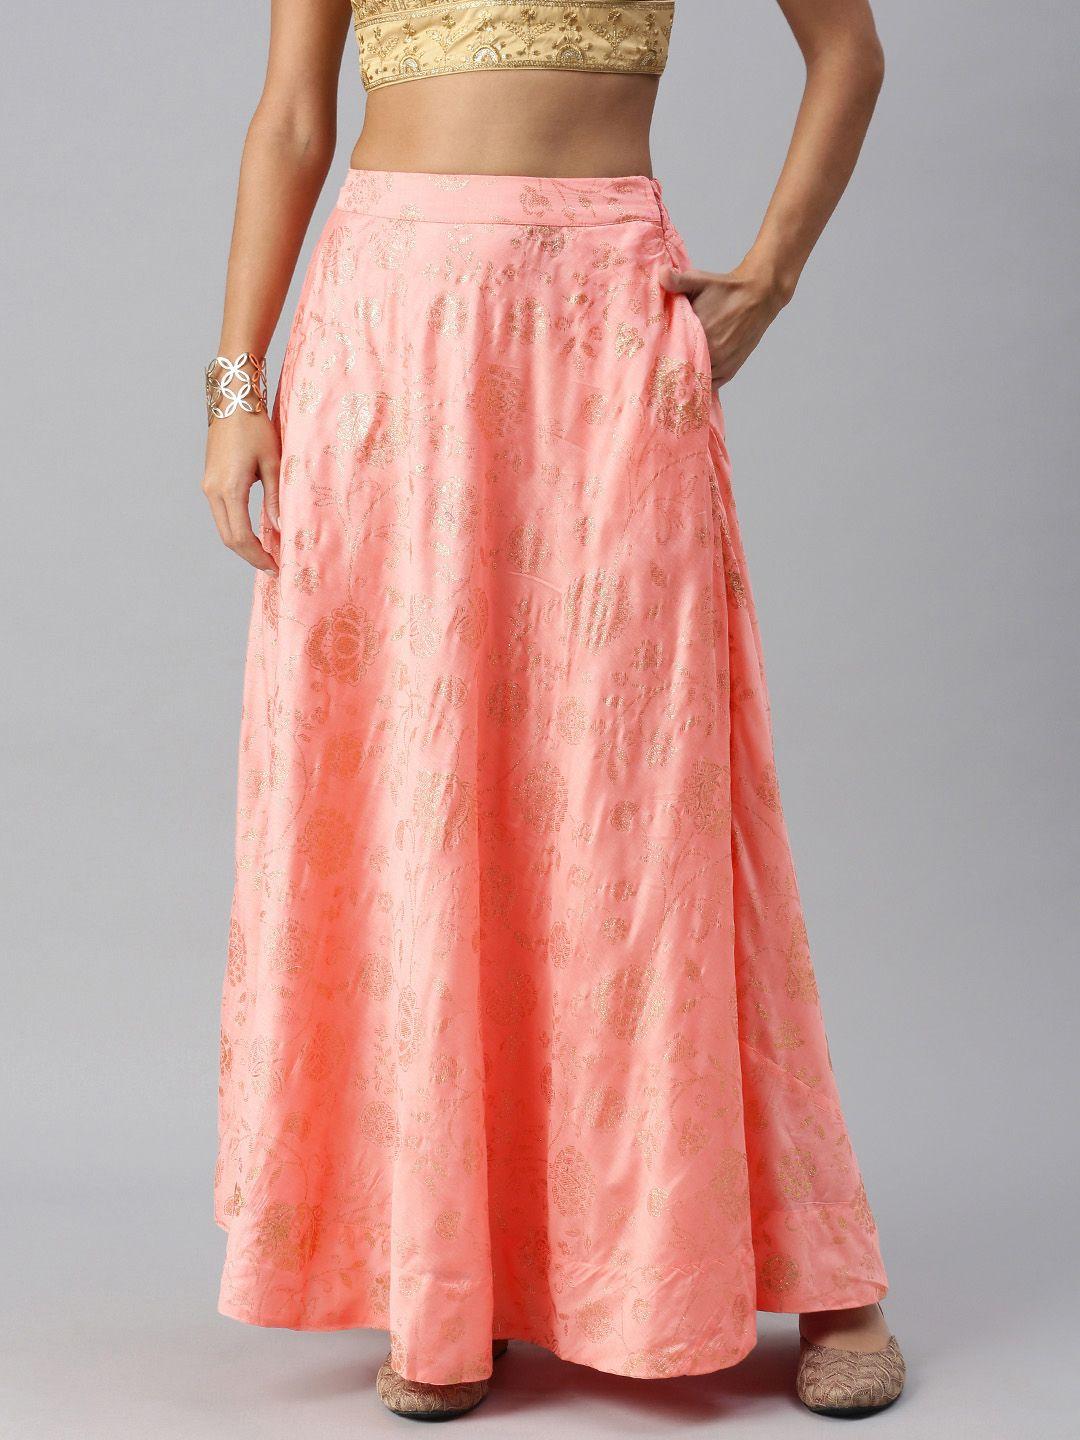 global desi women peach pink & gold-toned embellished paneled flared maxi skirt